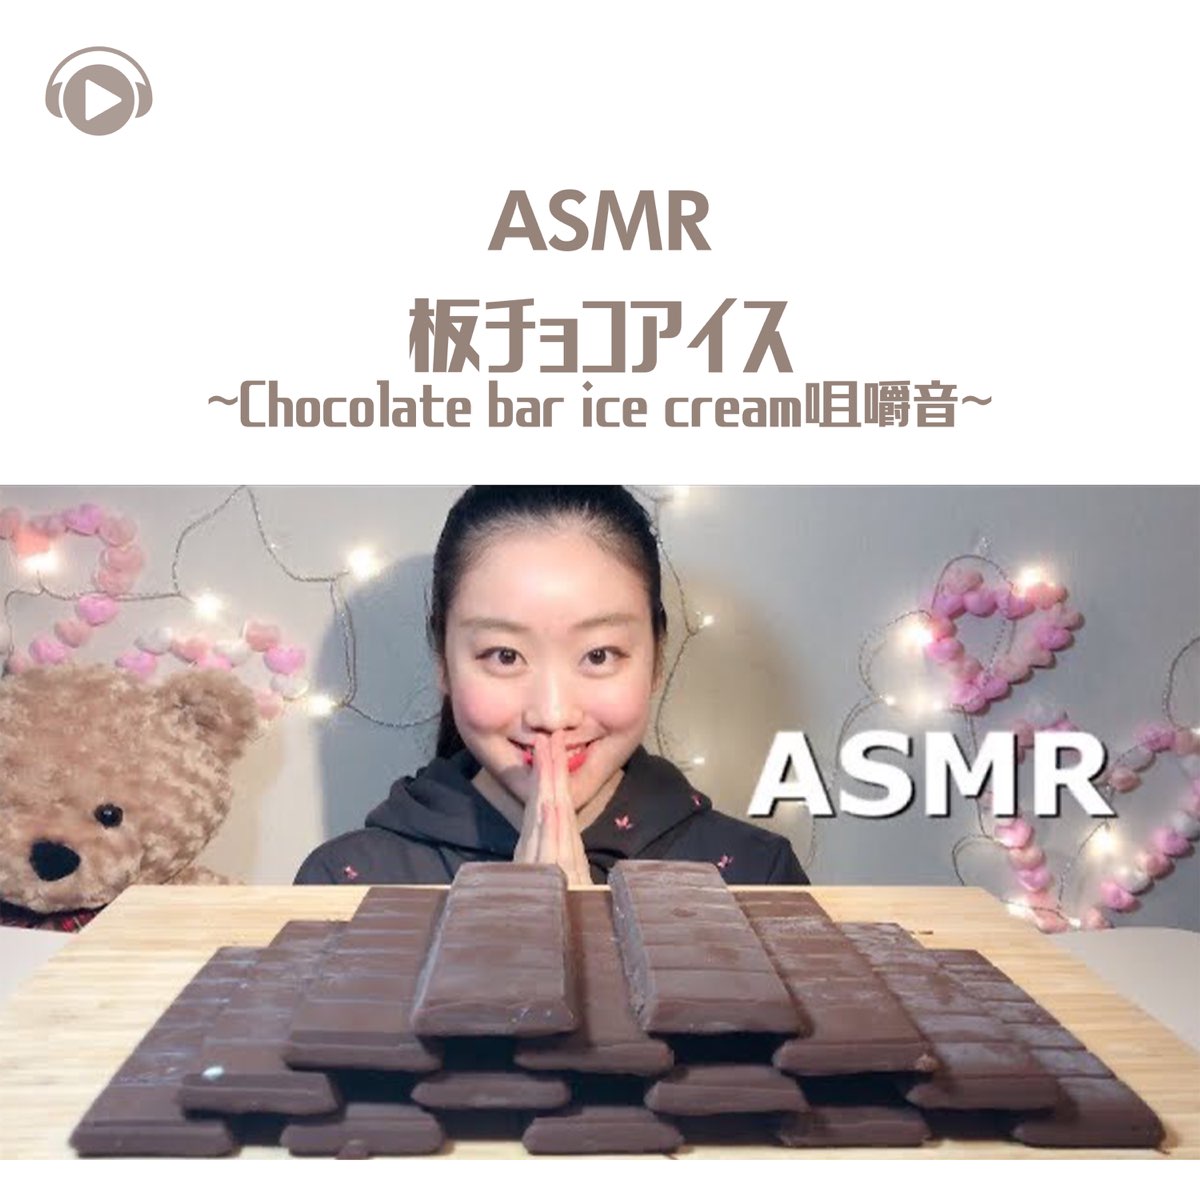 Asmr - Chocolate Bar Ice Cream - Chewing Sounds -, Pt. 